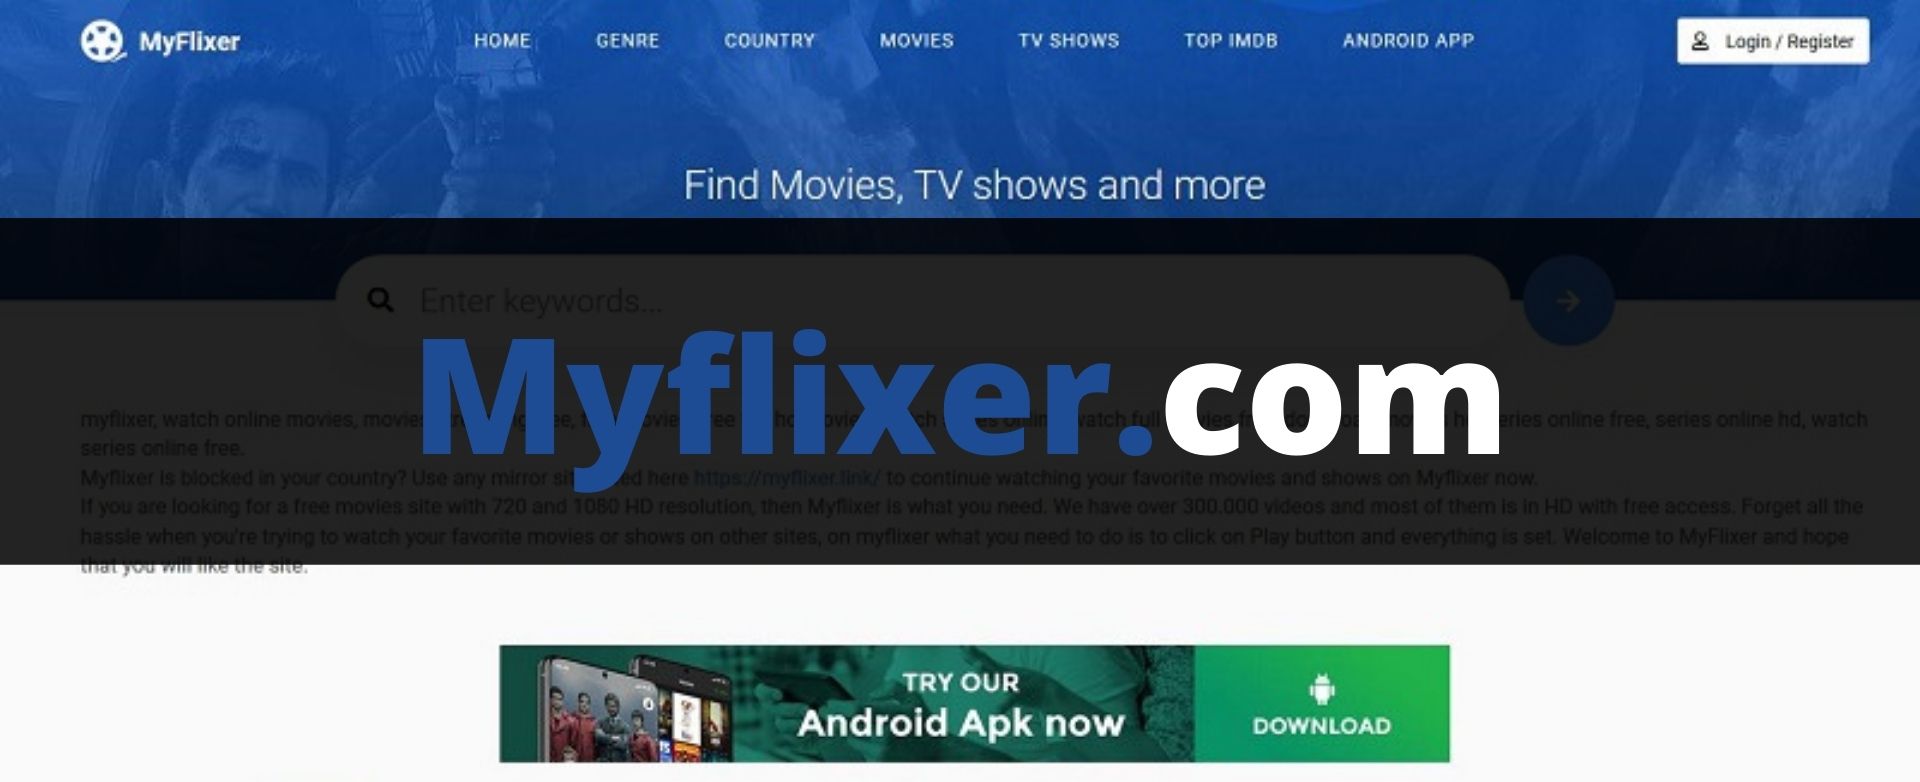 Myflixer.com